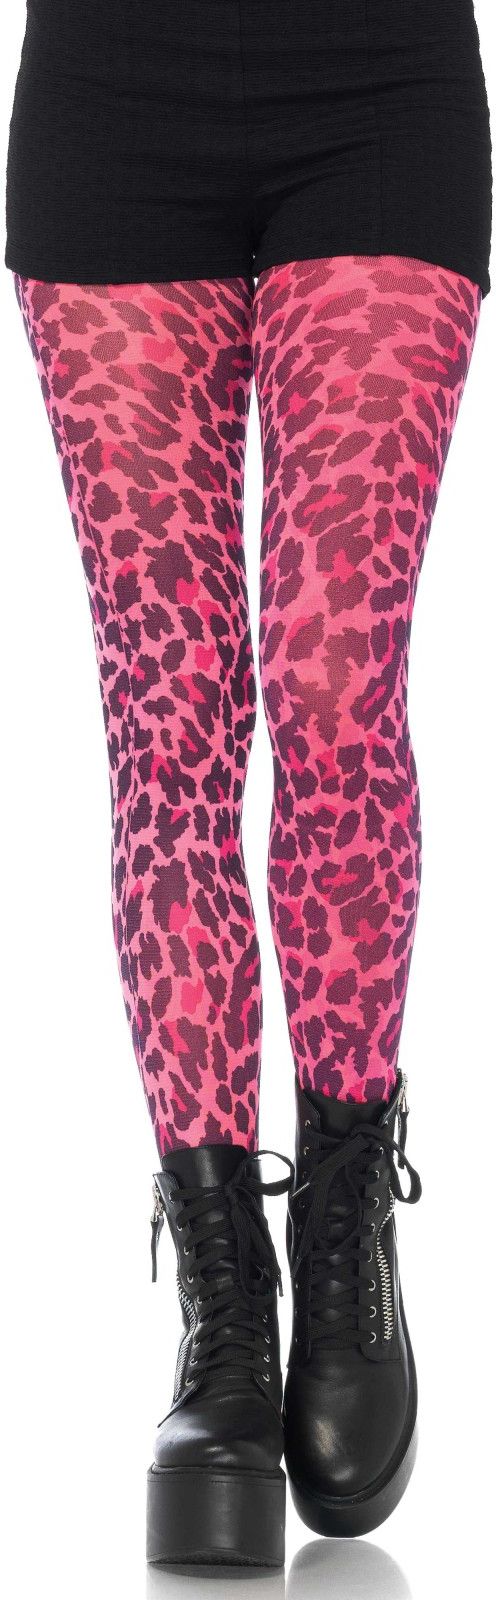 Neon roze luipaard print panty